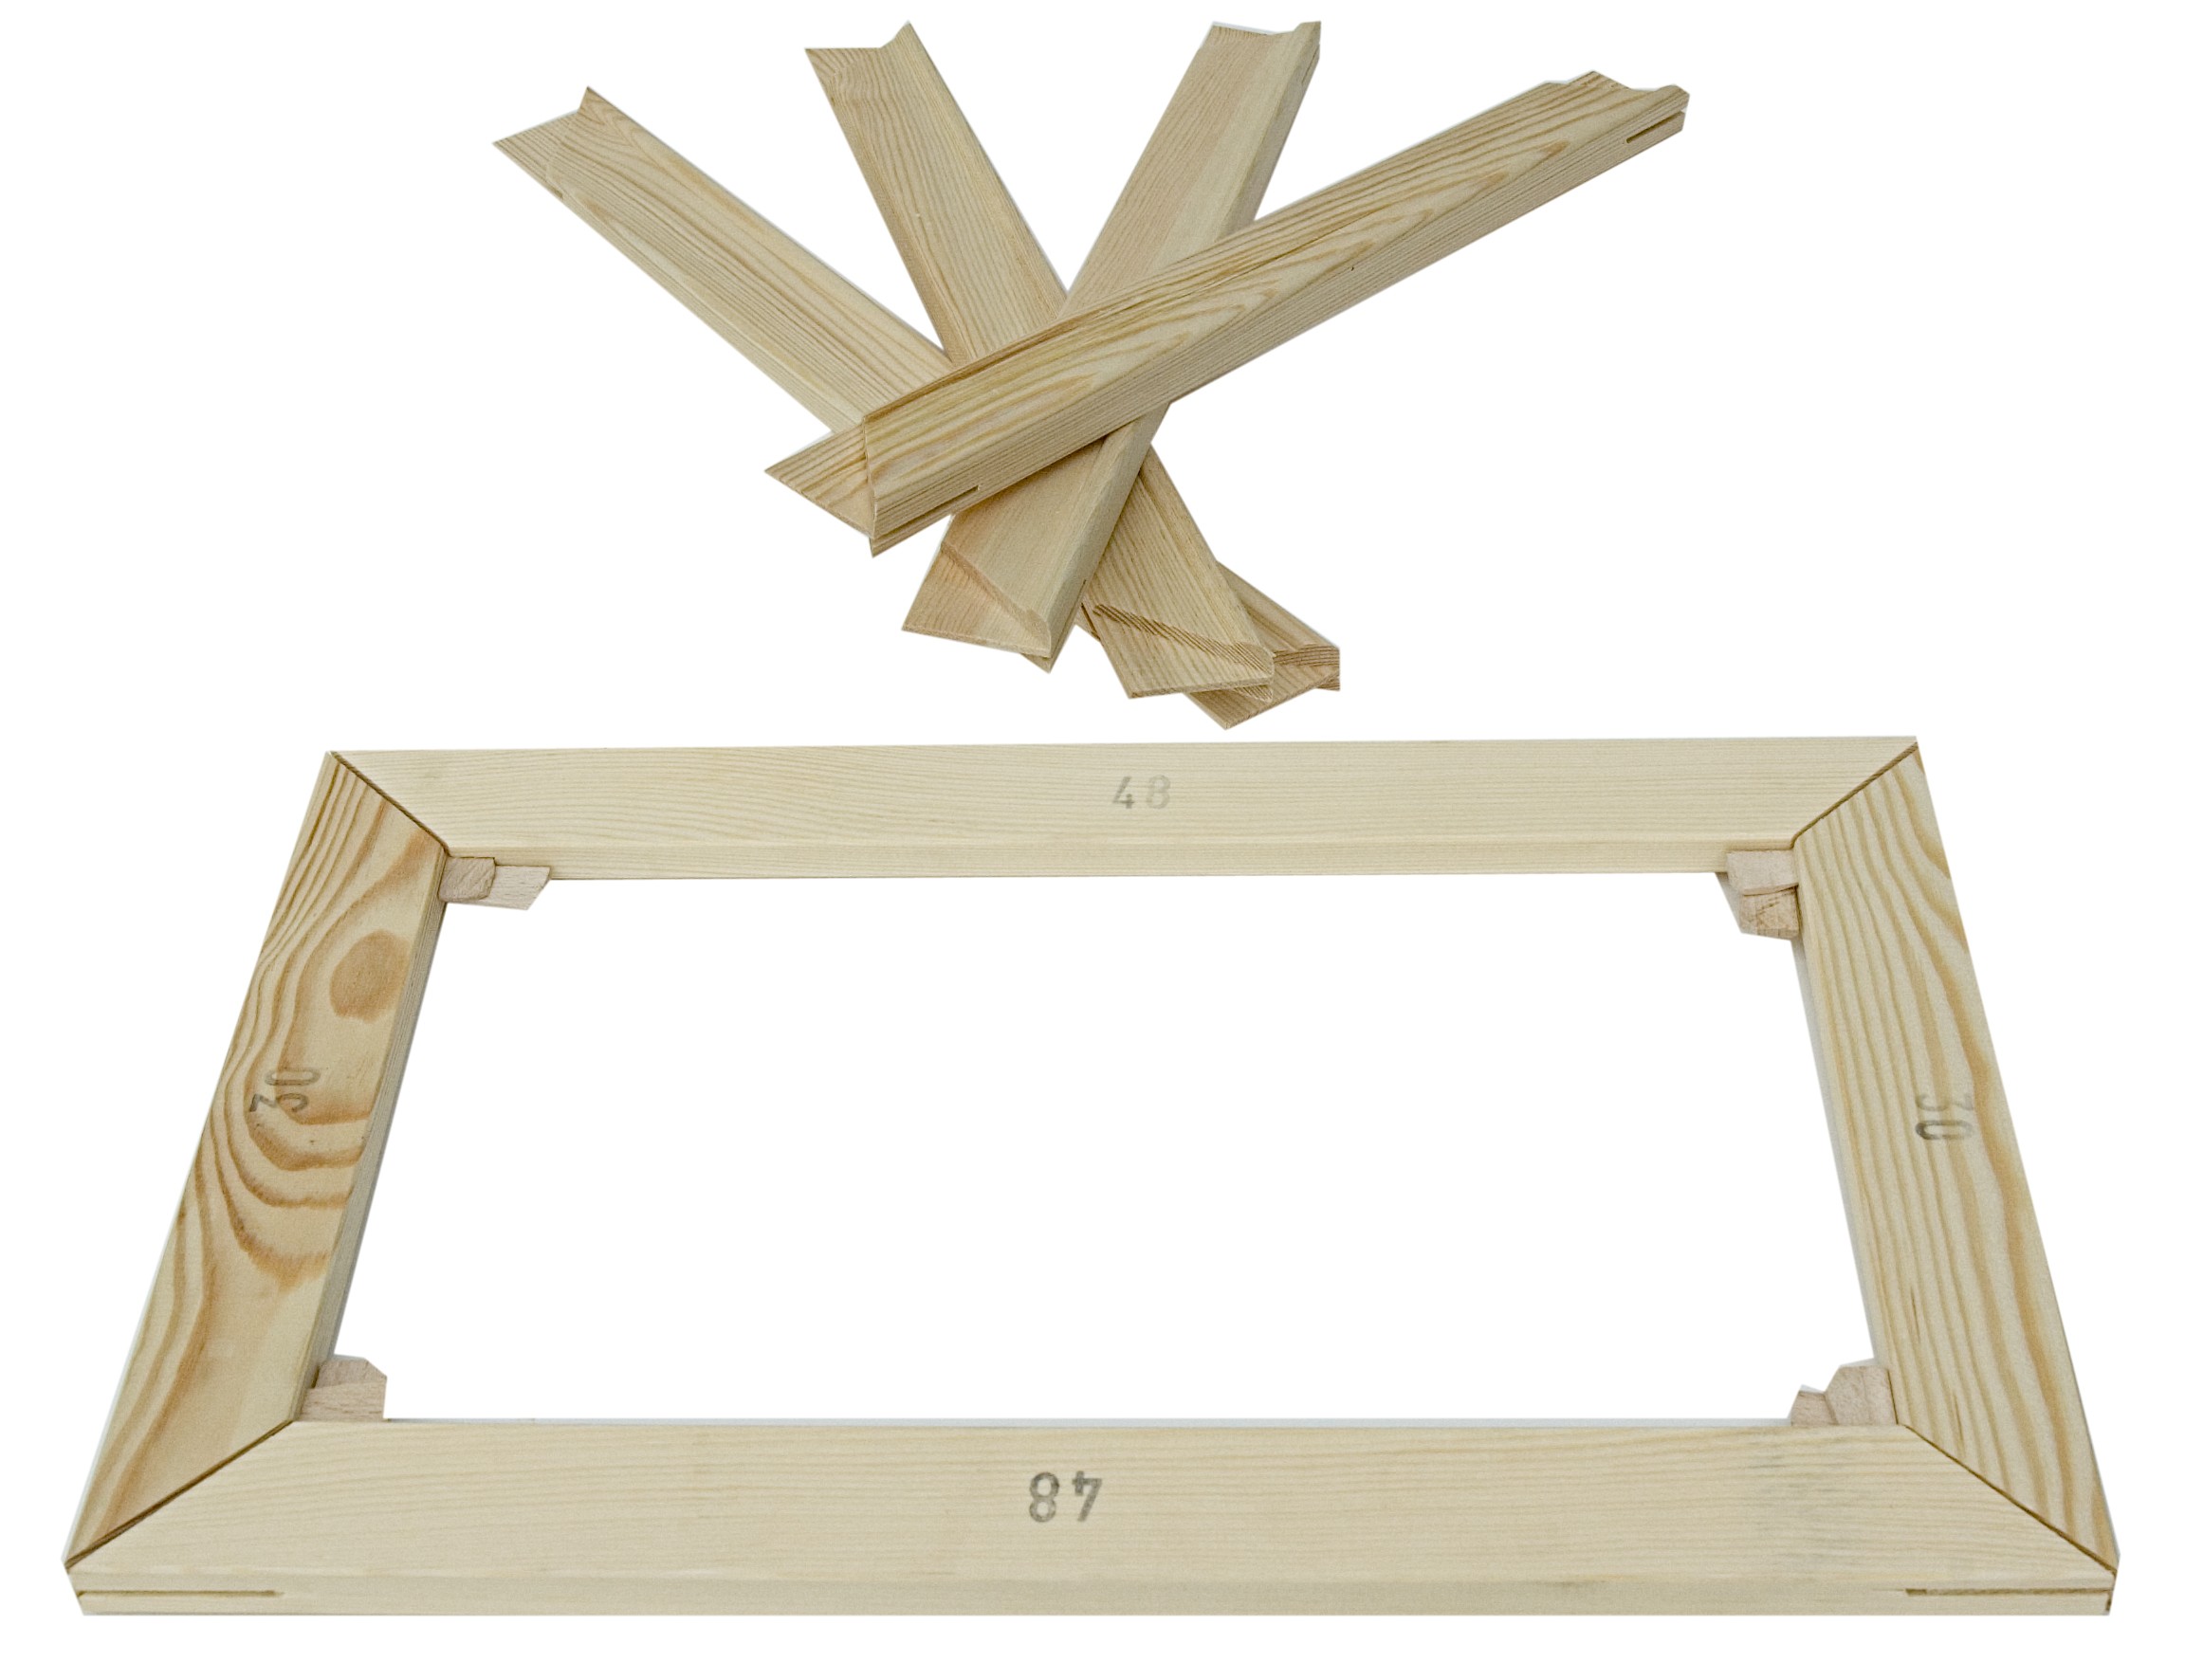 frame pieces for canvas stringing, including 2 hardwood wedges